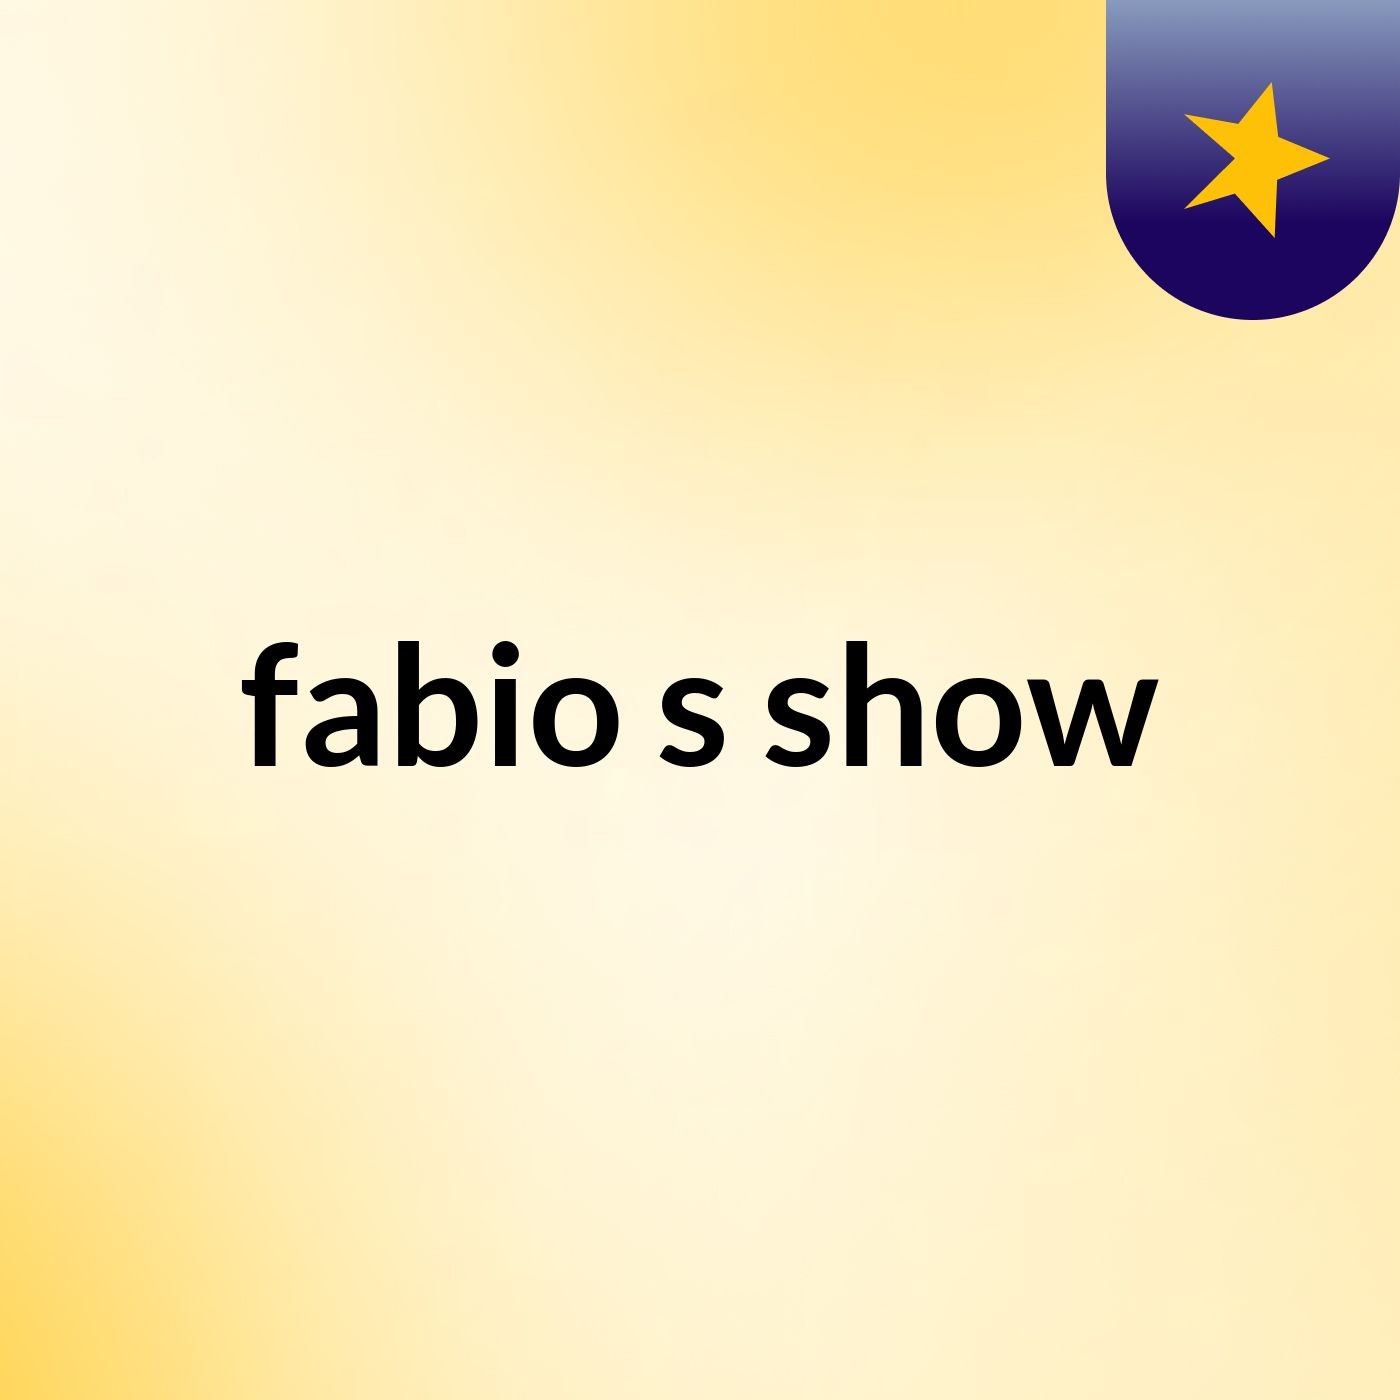 fabio's show